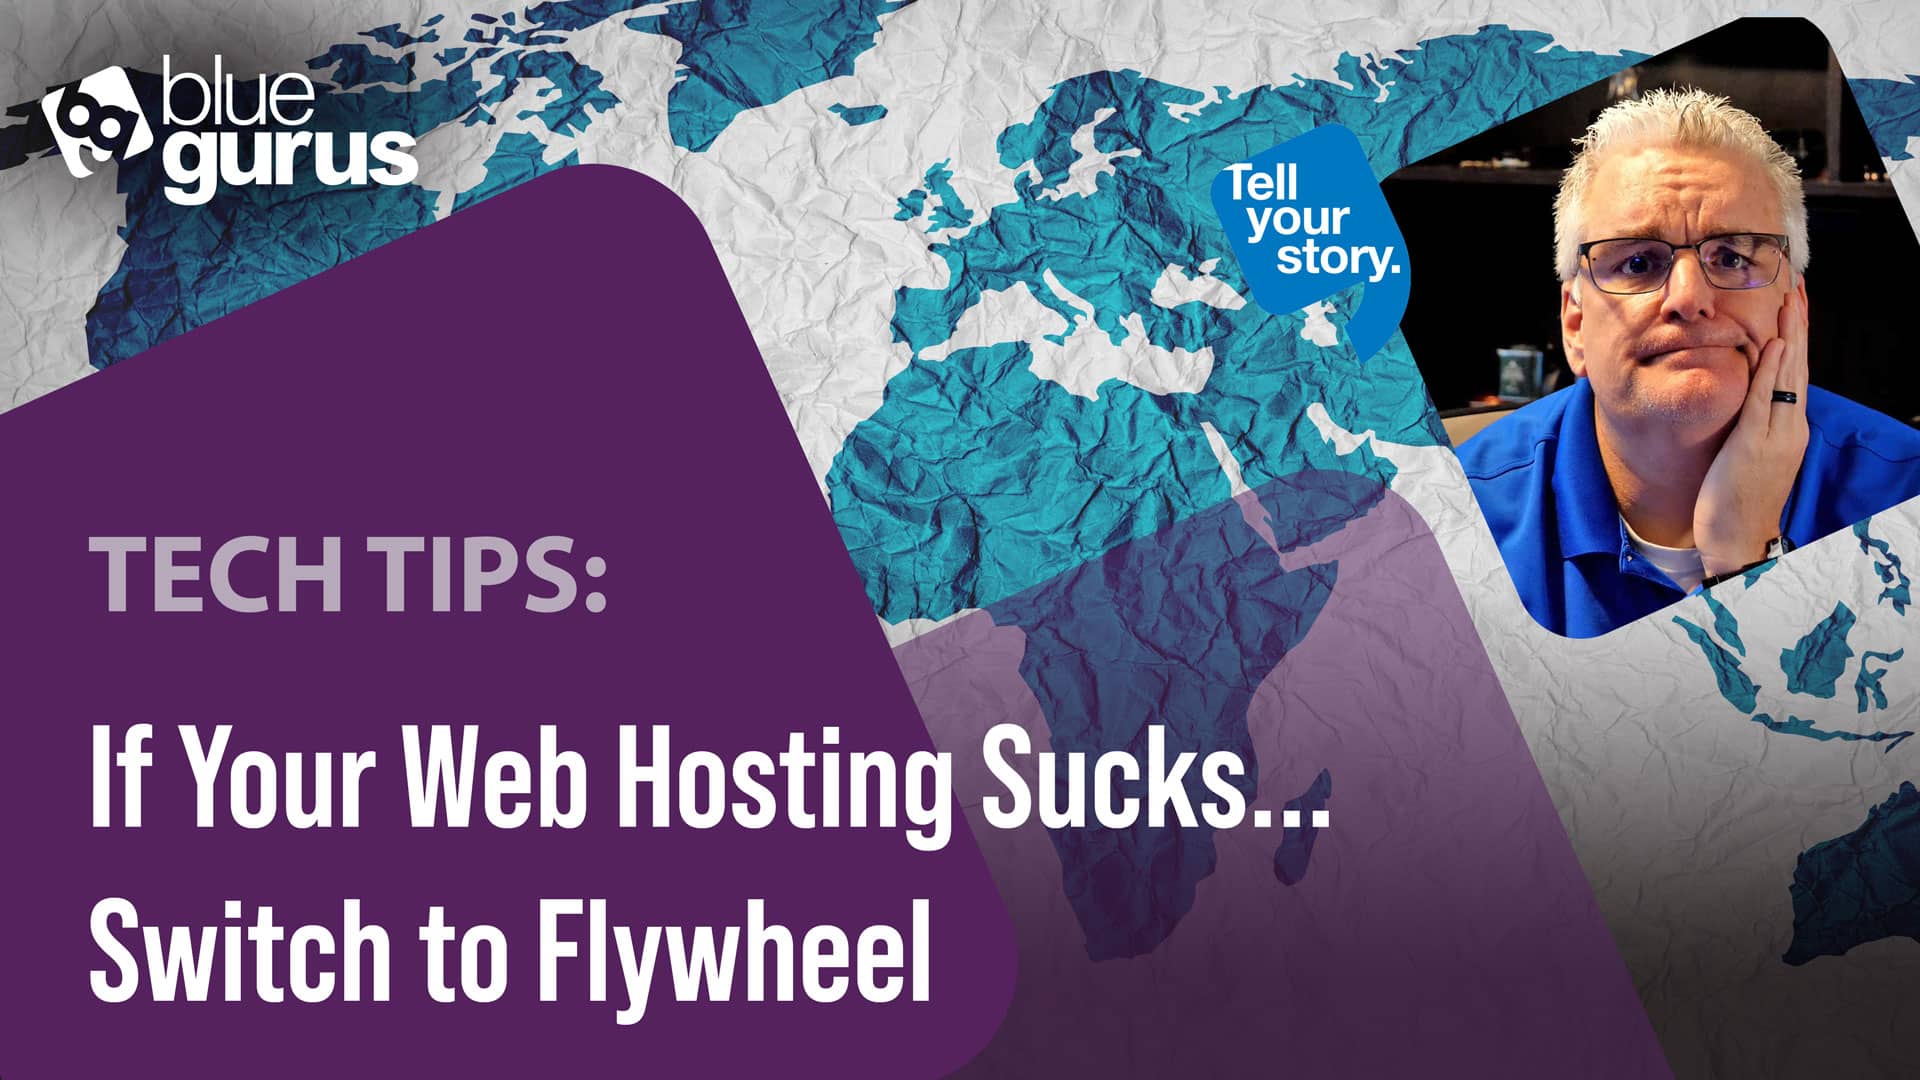 If Your Web Hosting Sucks, Switch to Flywheel